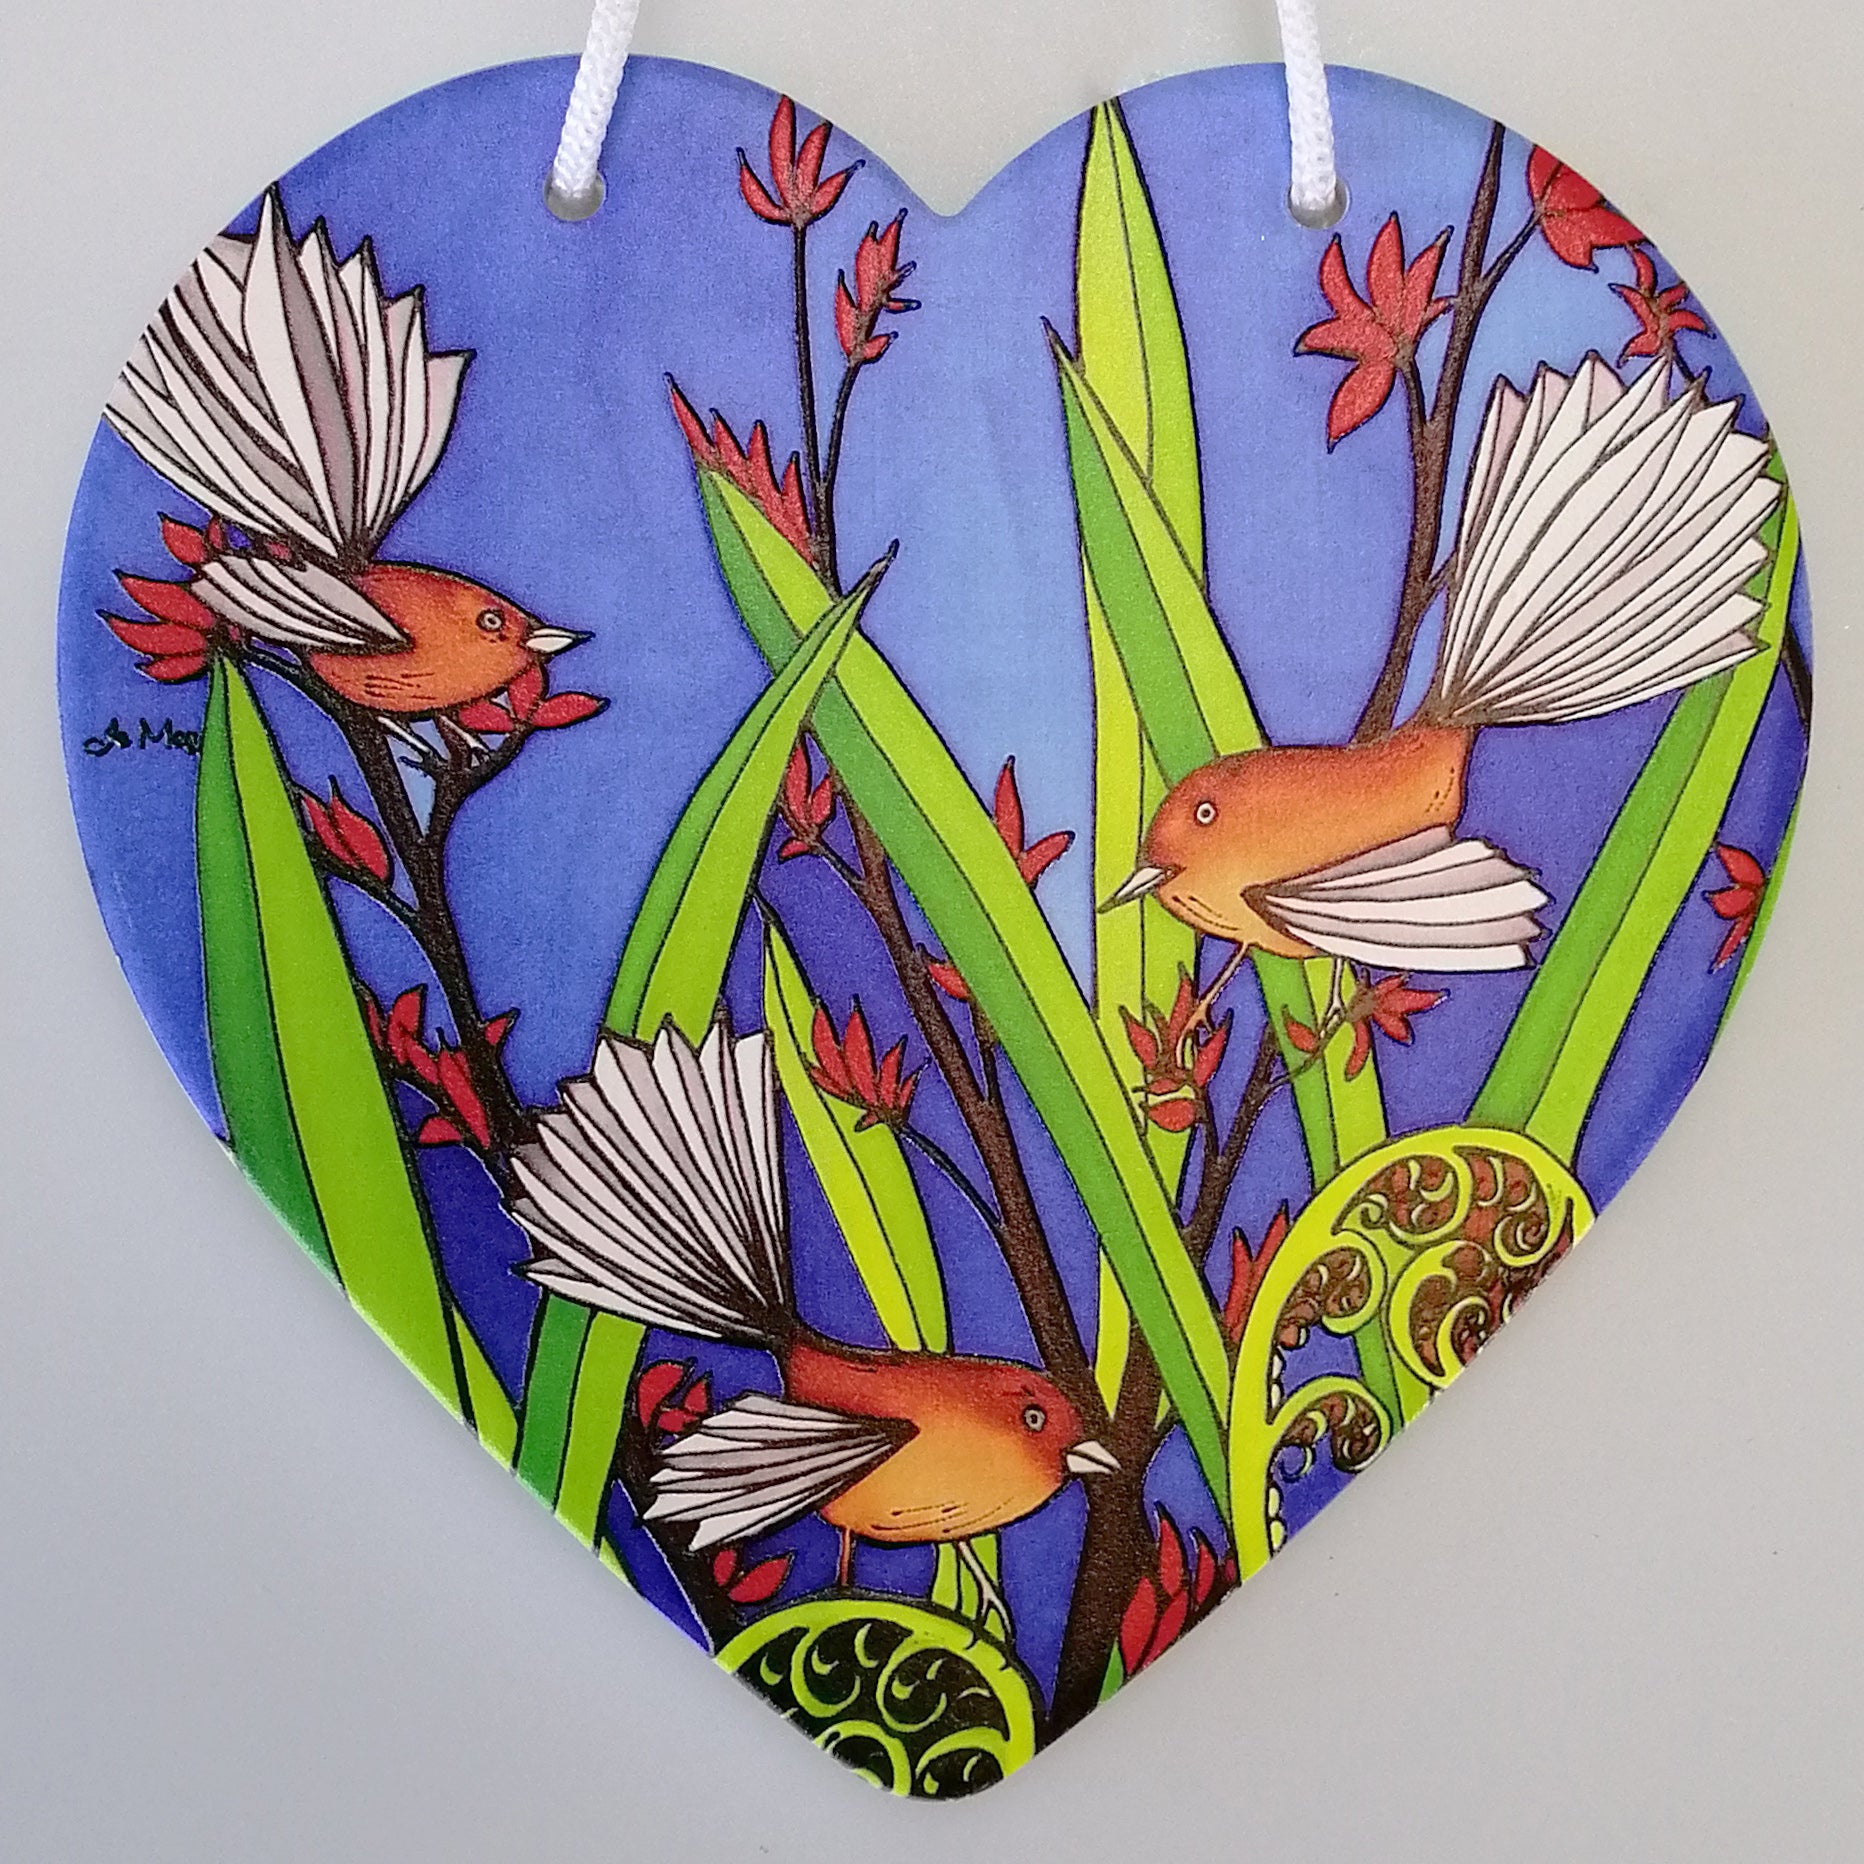 Jo May - Fantails Ceramic Heart Wall Hanging